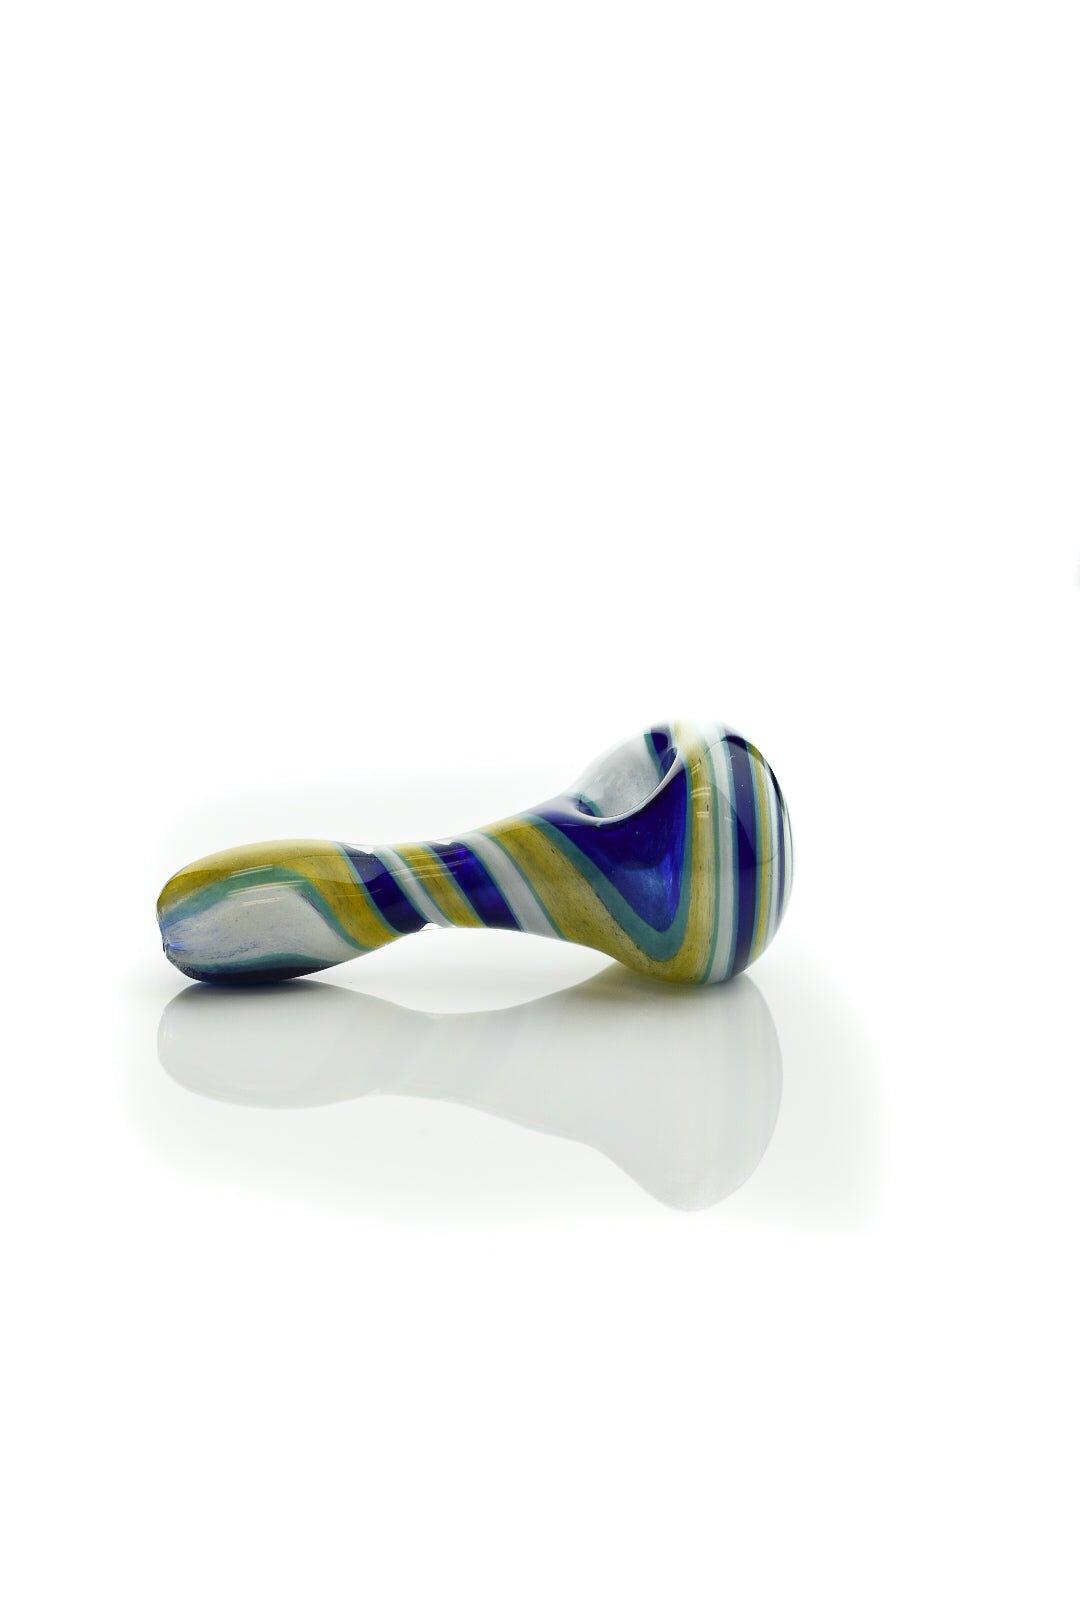 Mix twist colors #1 made by Hoffman glass - Smoke Spot Smoke Shop